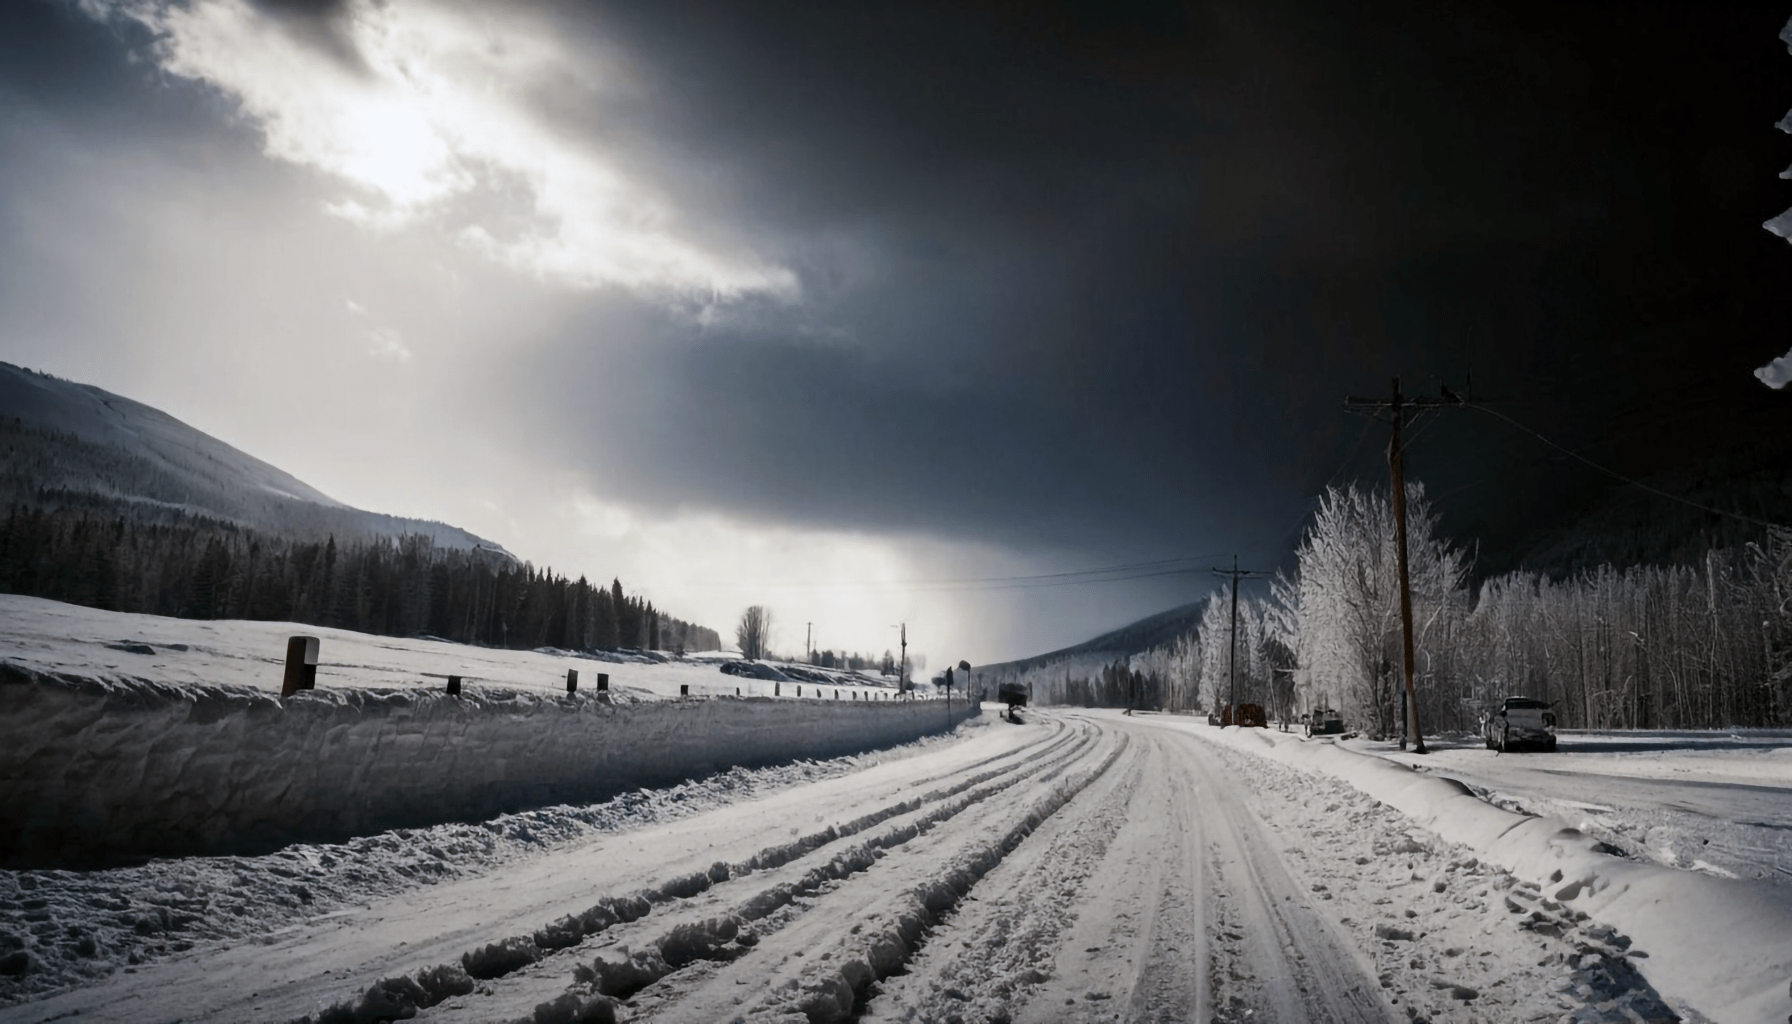 Winter Preparedness Kit for Your Car : r/Buffalo